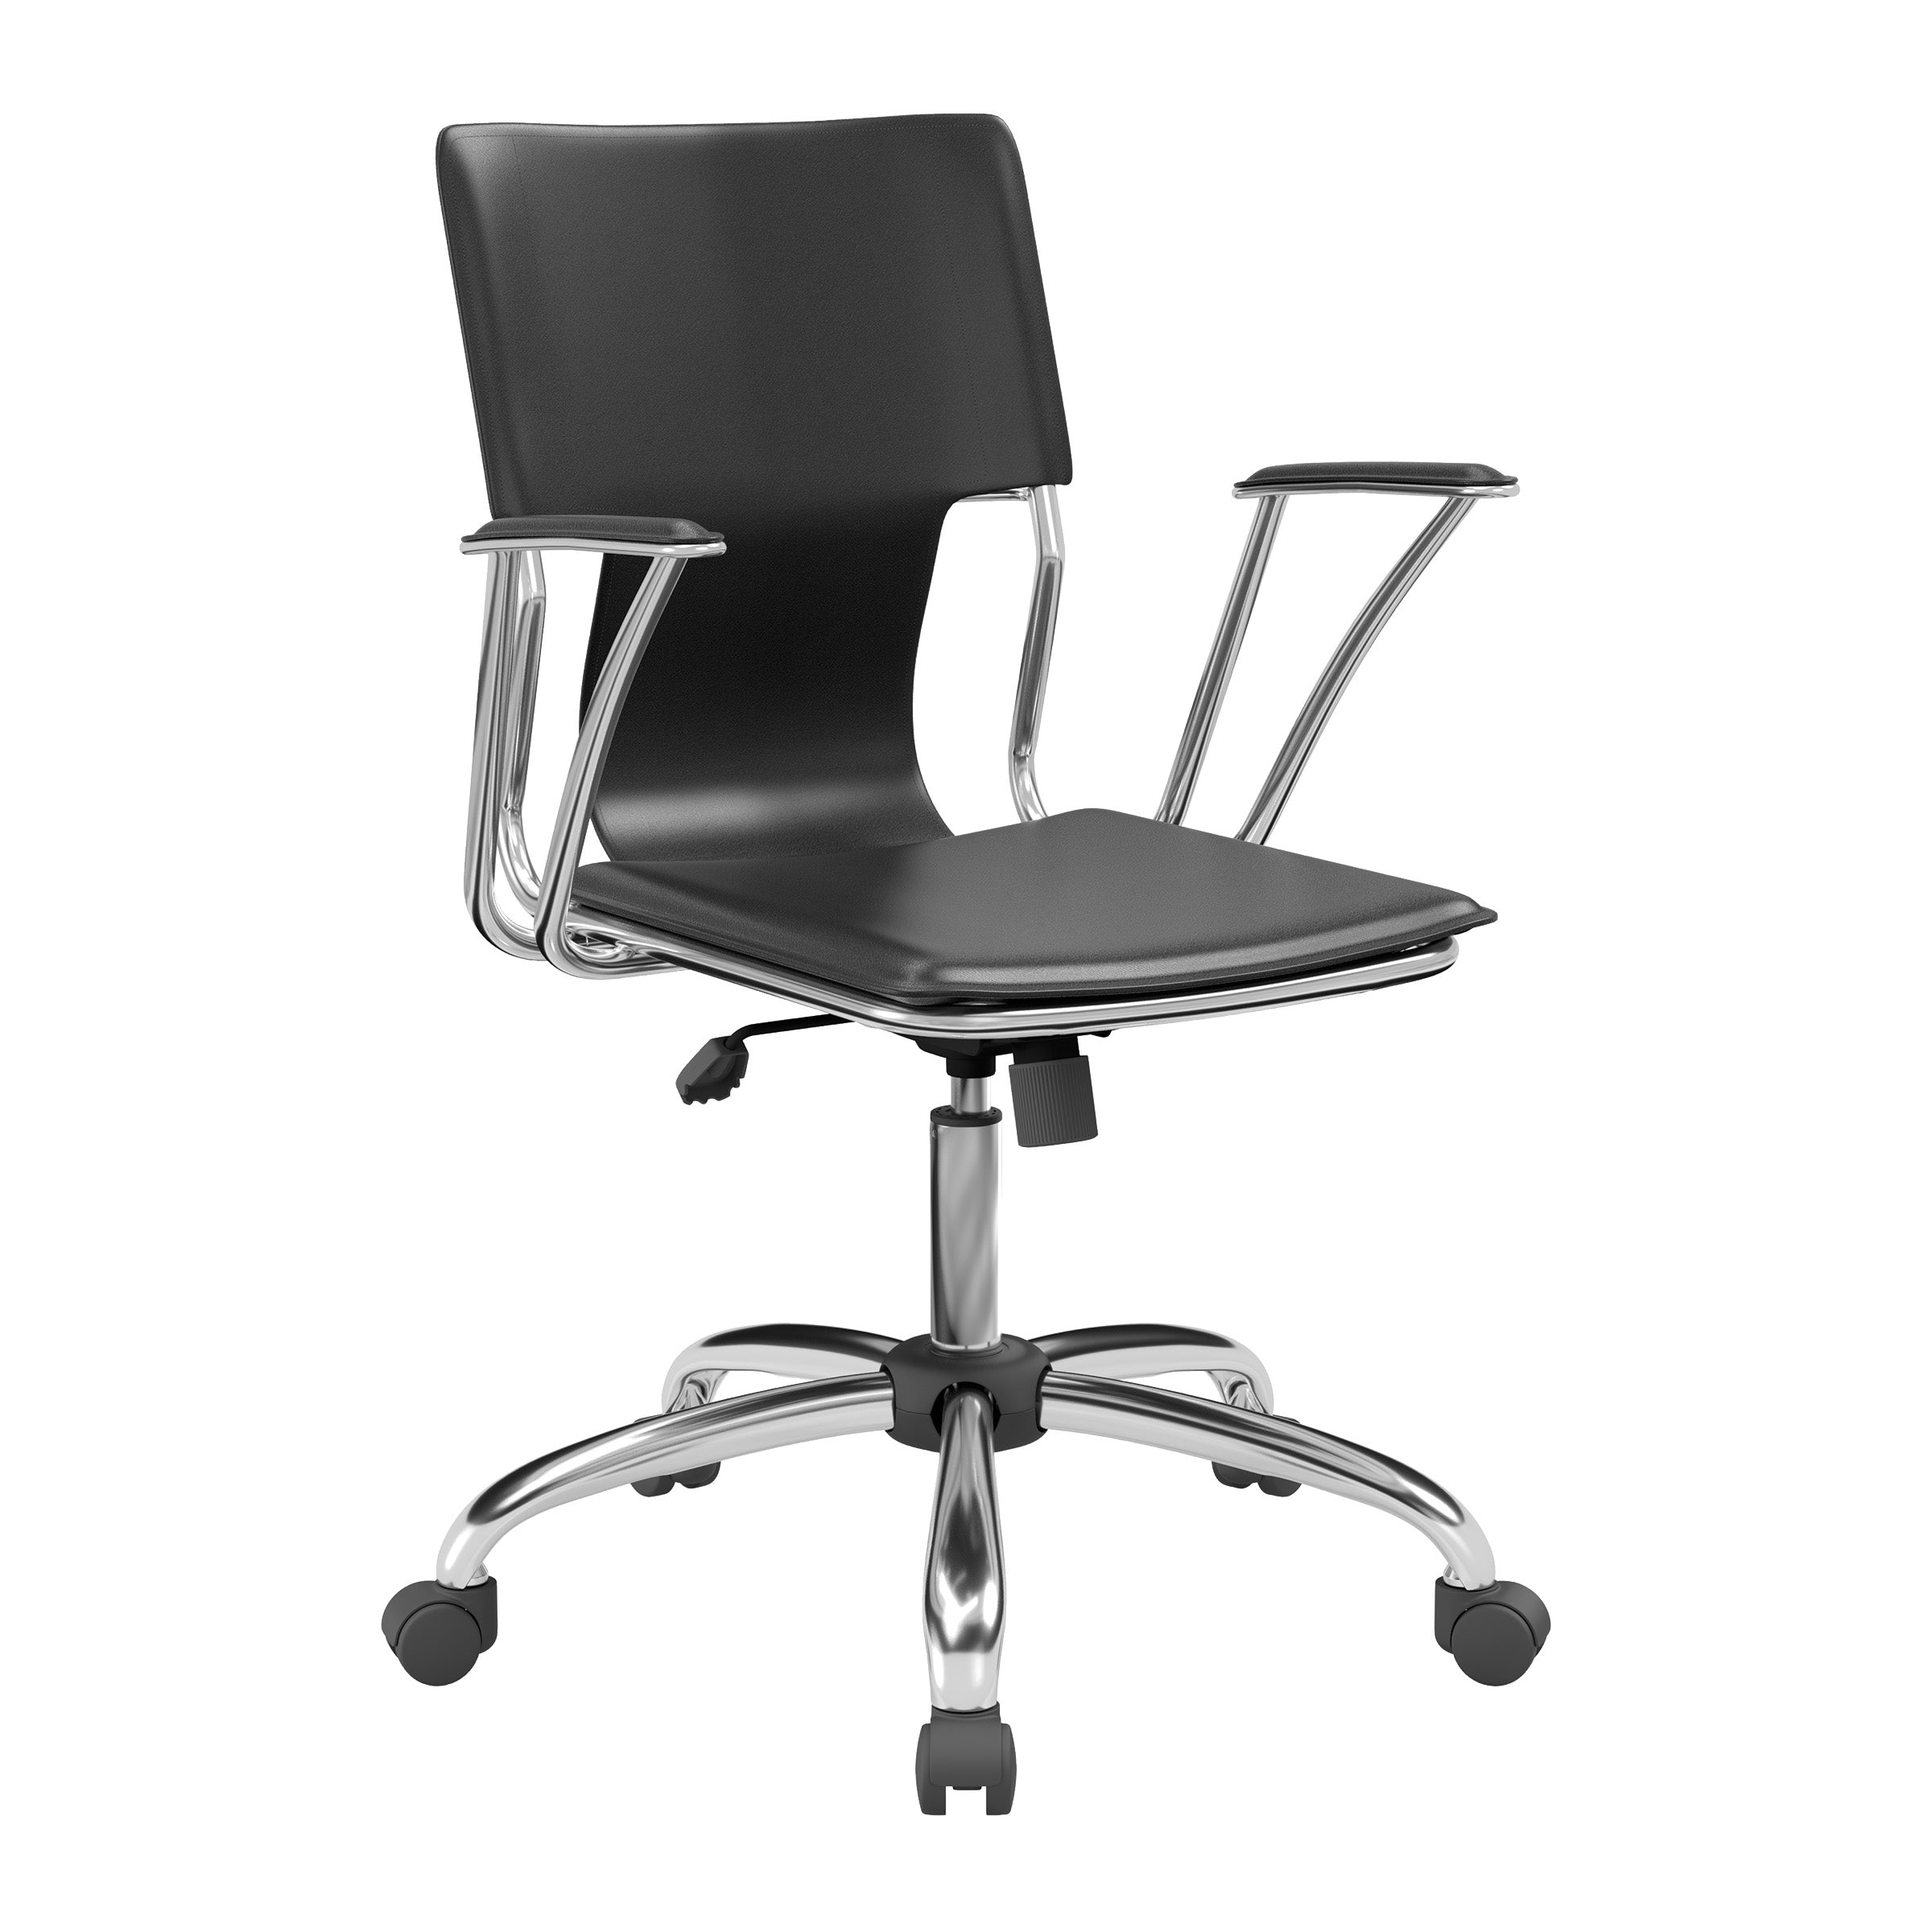 Dorado Office Chair